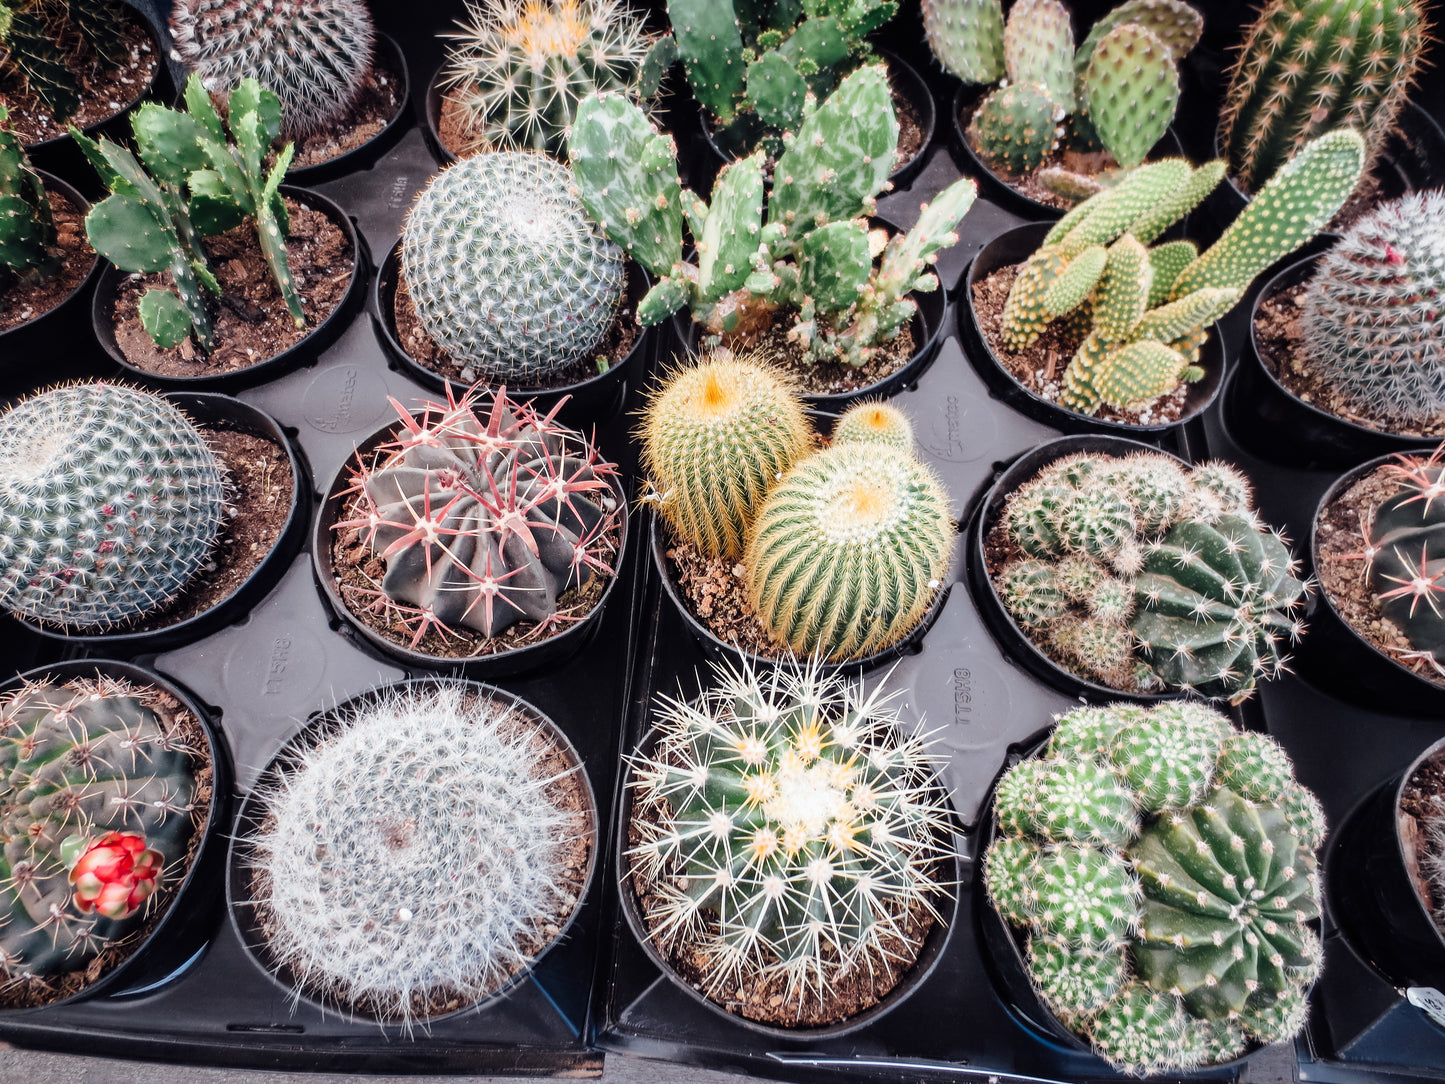 Photograph of Cactus Plants